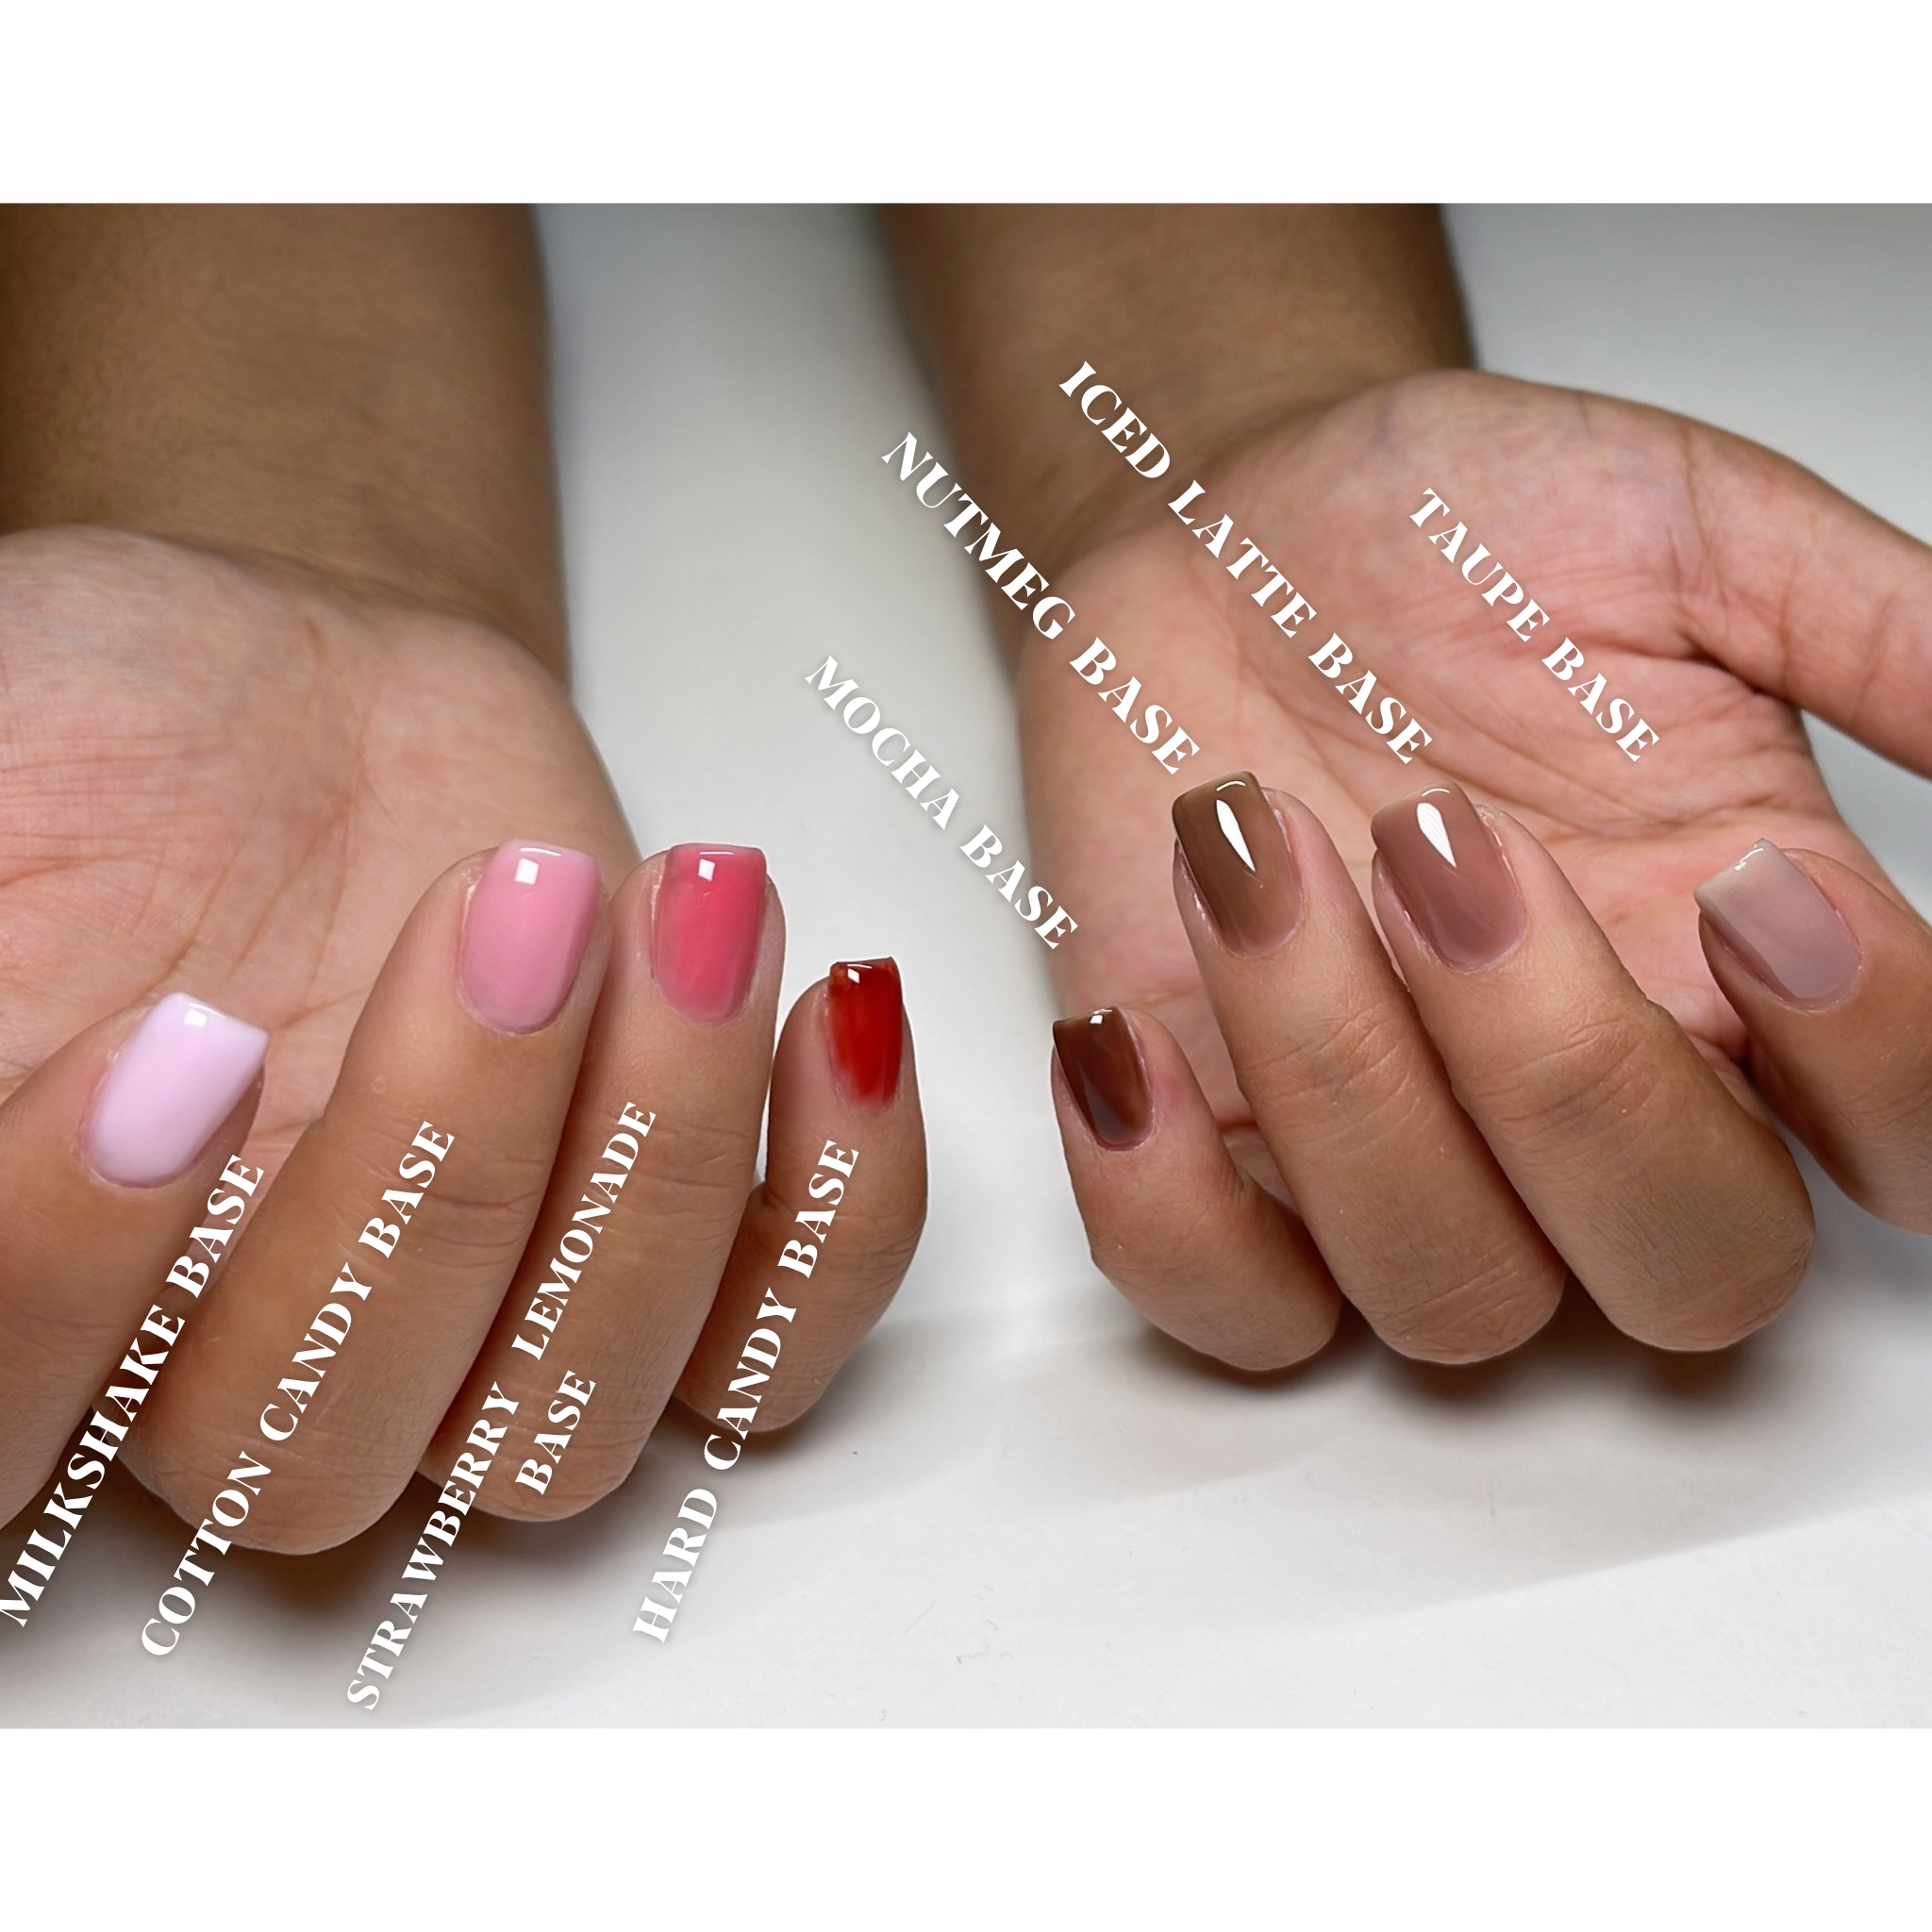 Manicure Treatments - at Spa Fusion